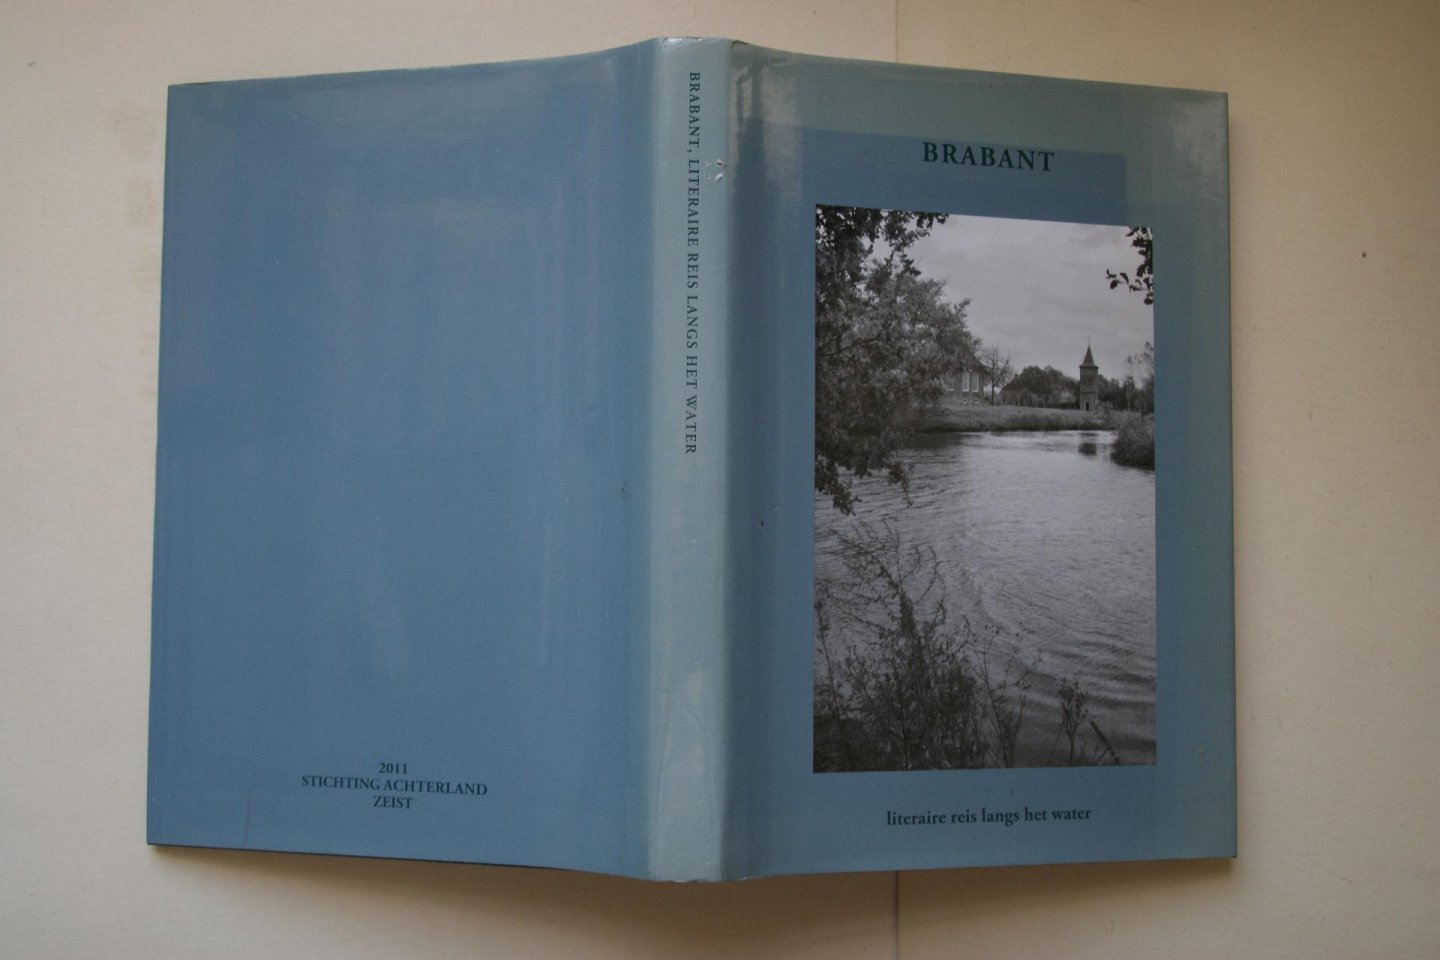  - Brabant  literaire reis langs het water  Bloemlezing